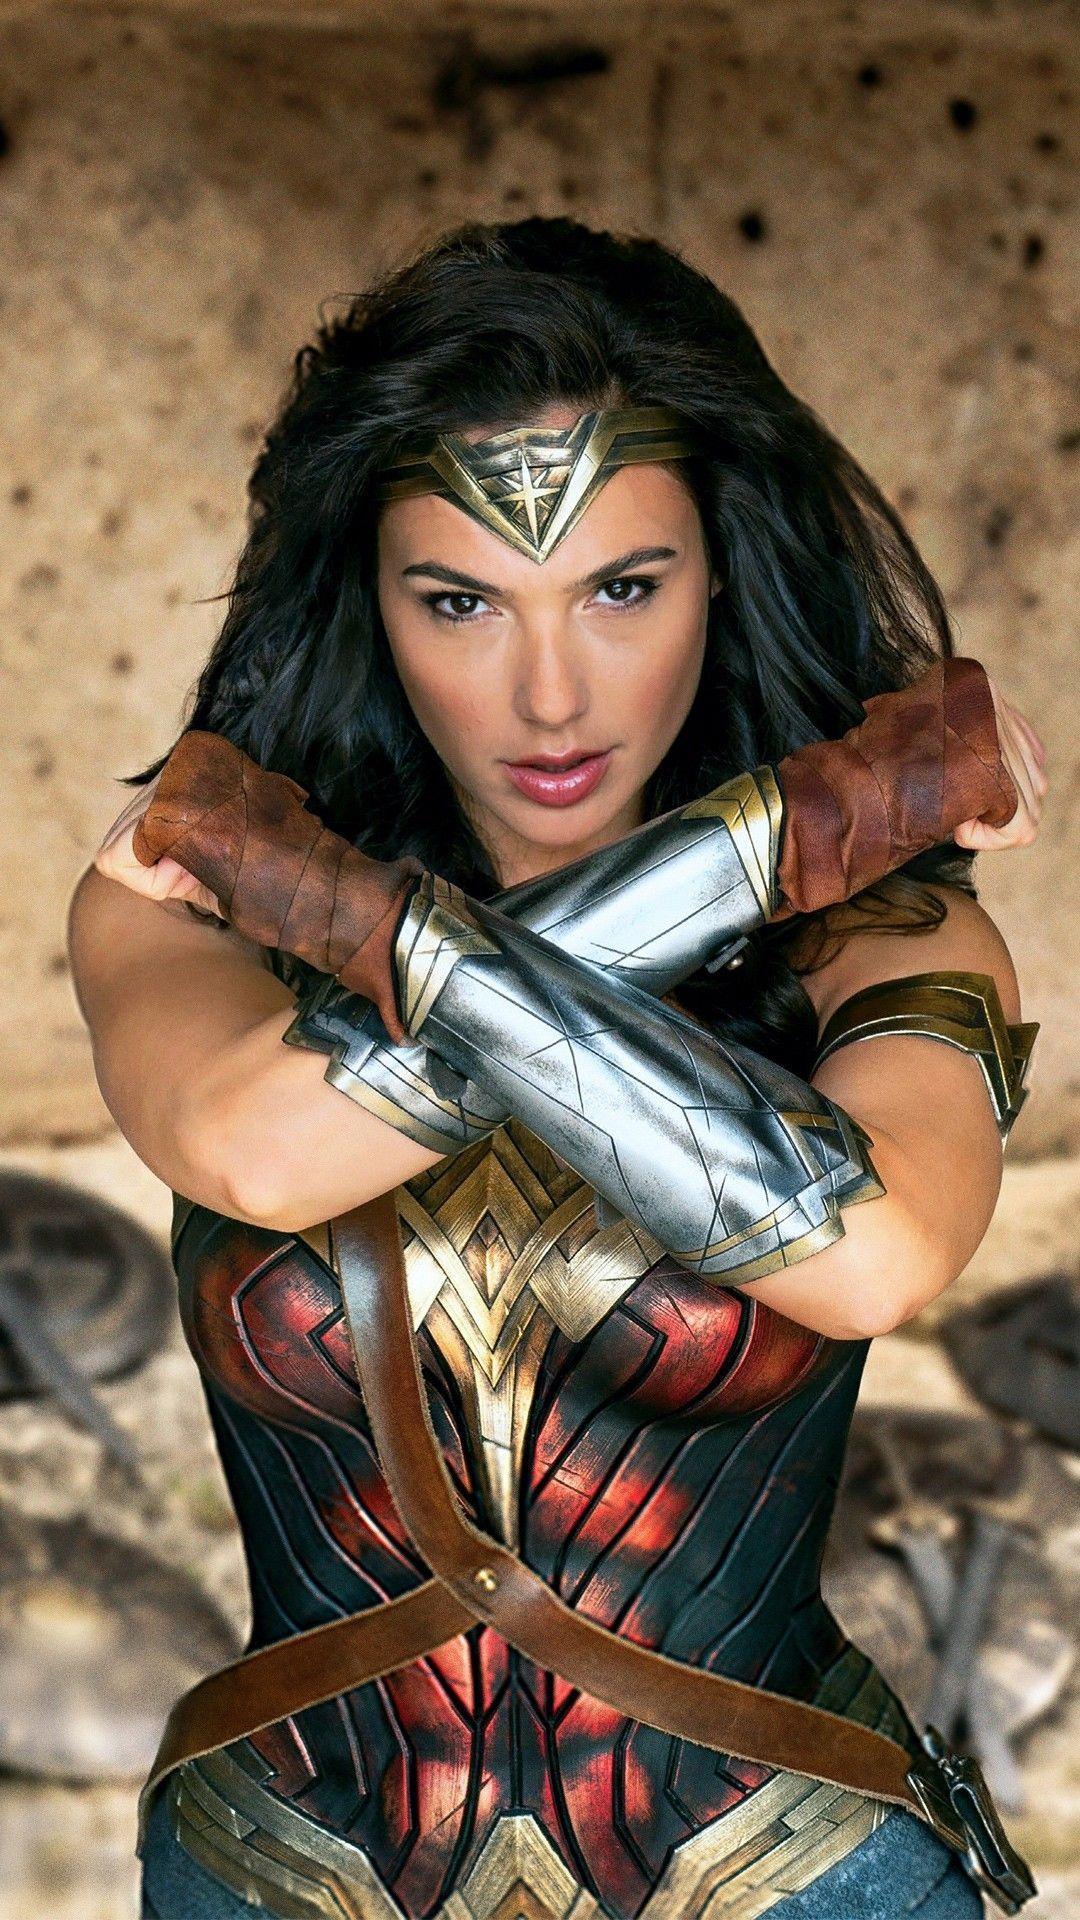 iPhone X Wallpaper Wonder Woman iPhone Wallpaper. Gal gadot wonder woman, Wonder woman cosplay, Wonder woman movie